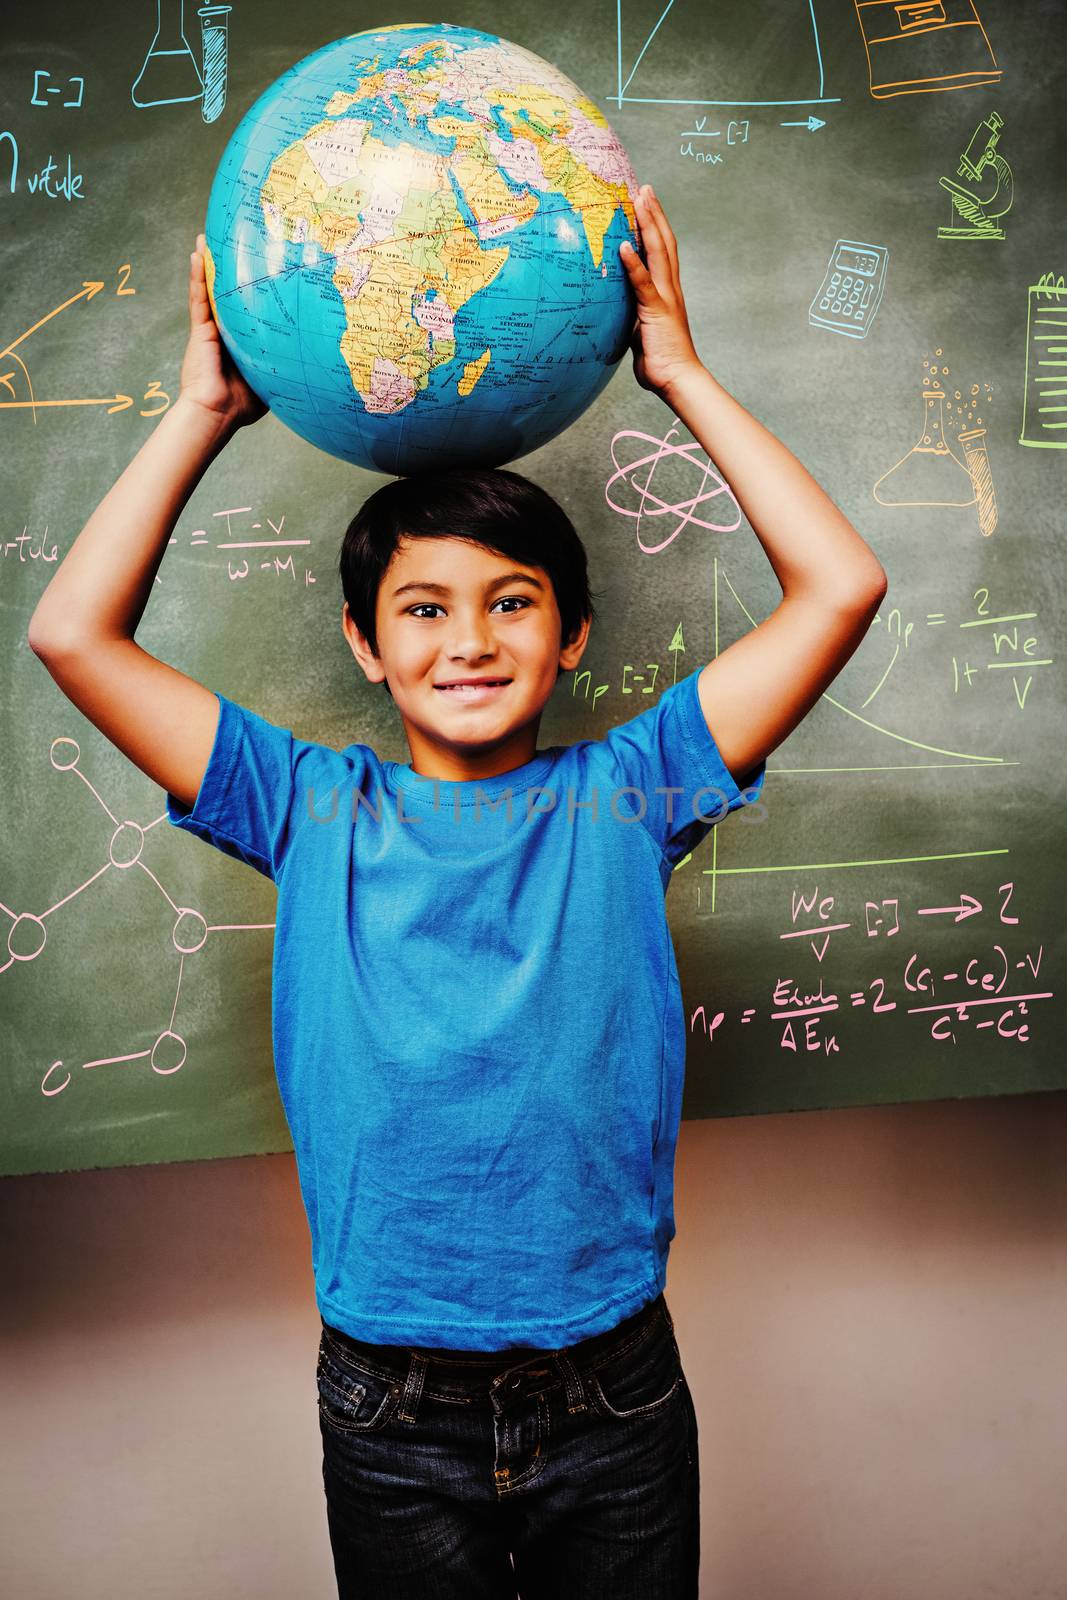 Education doodles against little boy holding globe over head